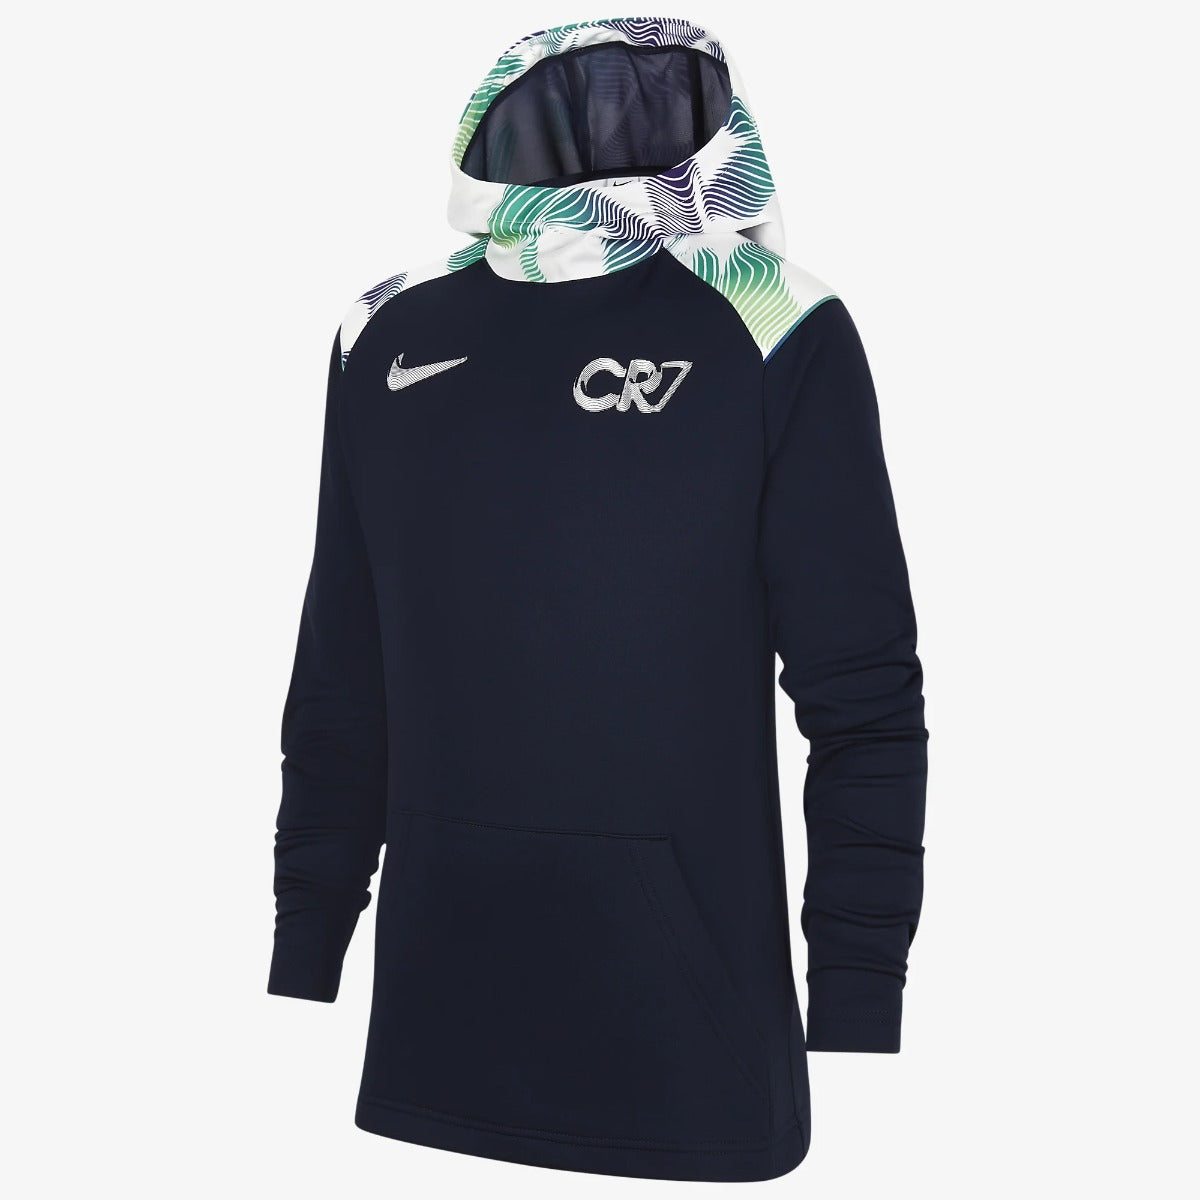 Nike, Felpa con cappuccio Nike Youth DF CR7 - Bianco-ossidiana